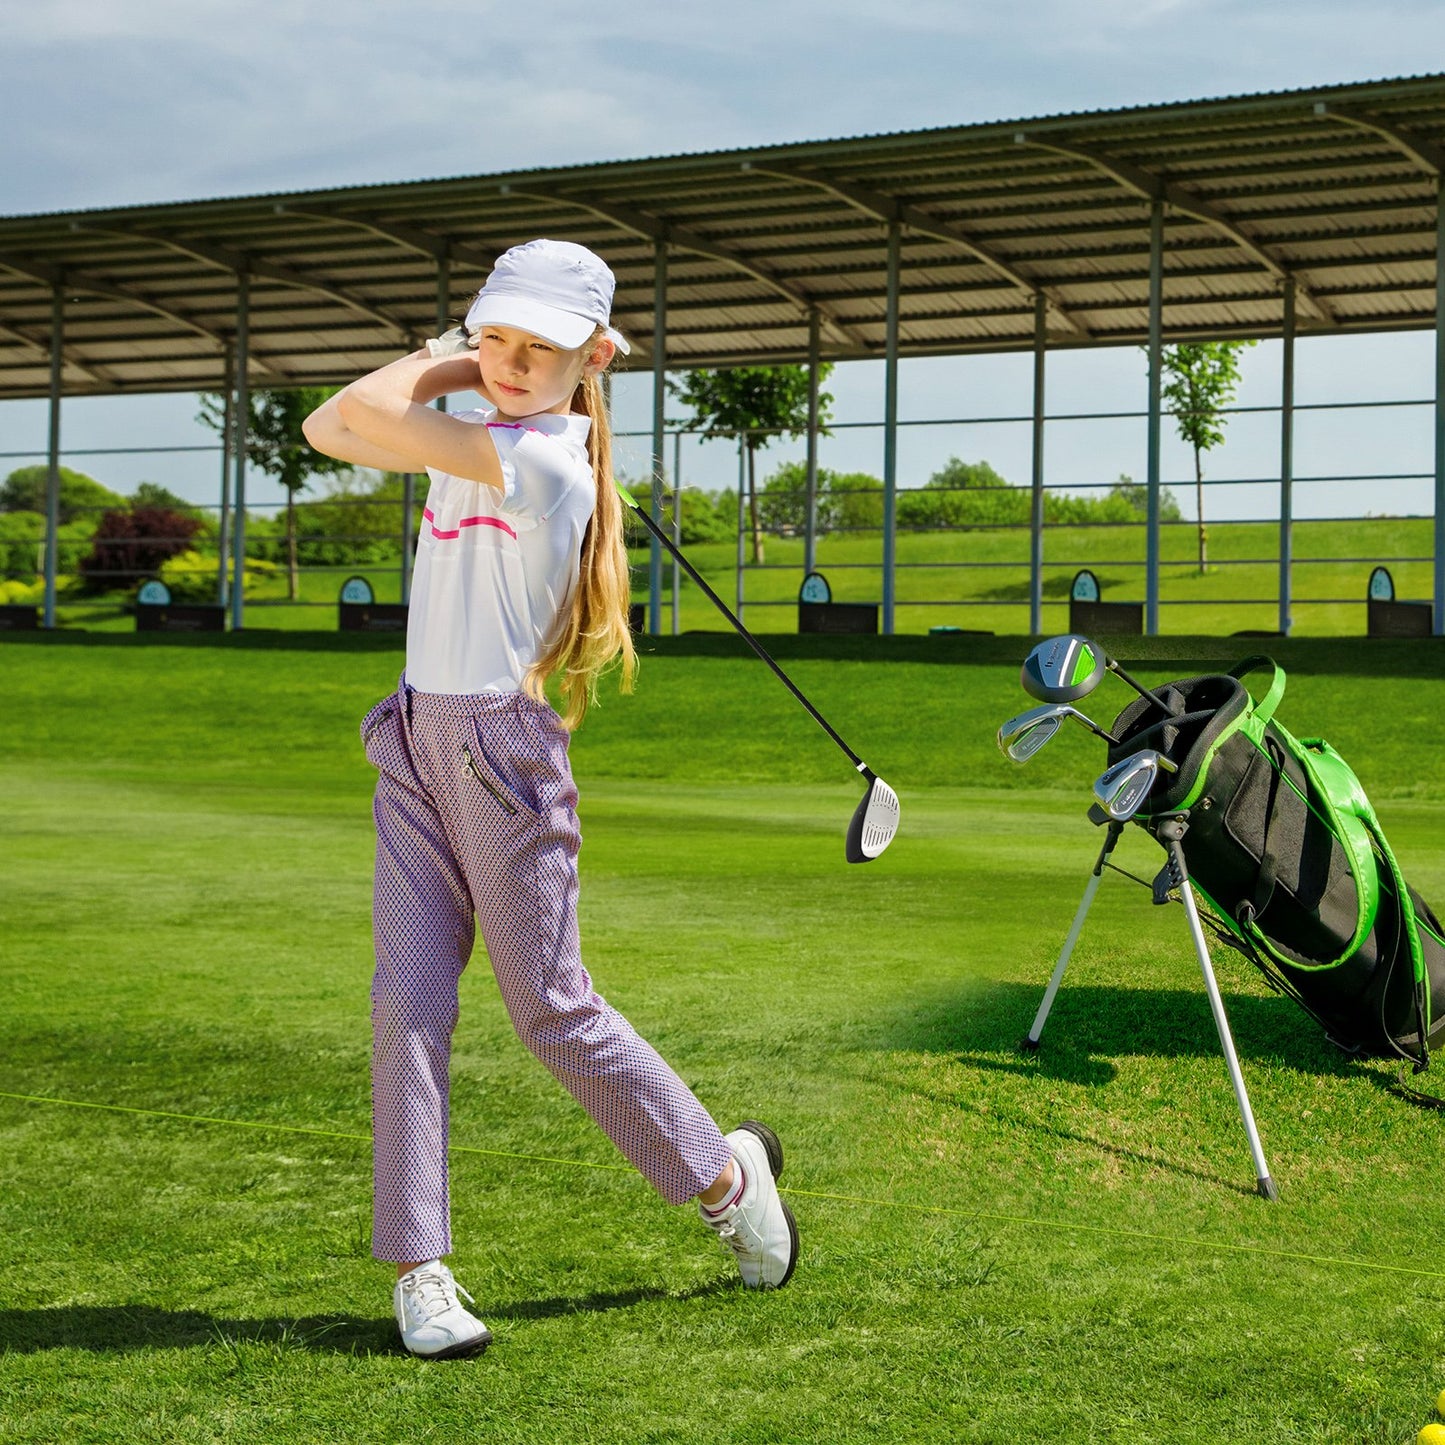 Junior Complete Golf Club Set with Stand Bag Rain Hood, Green